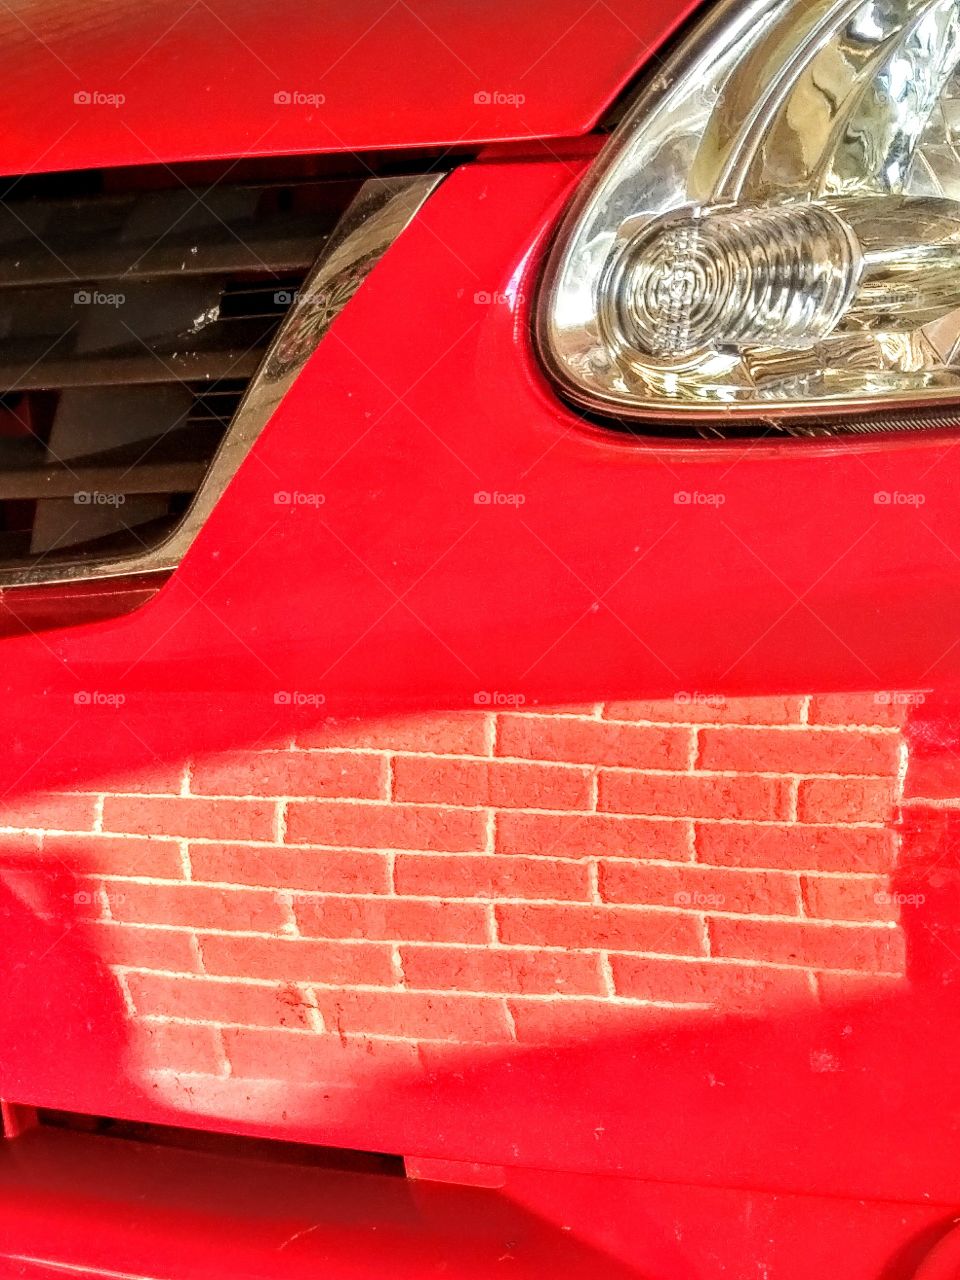 Brick reflection on car